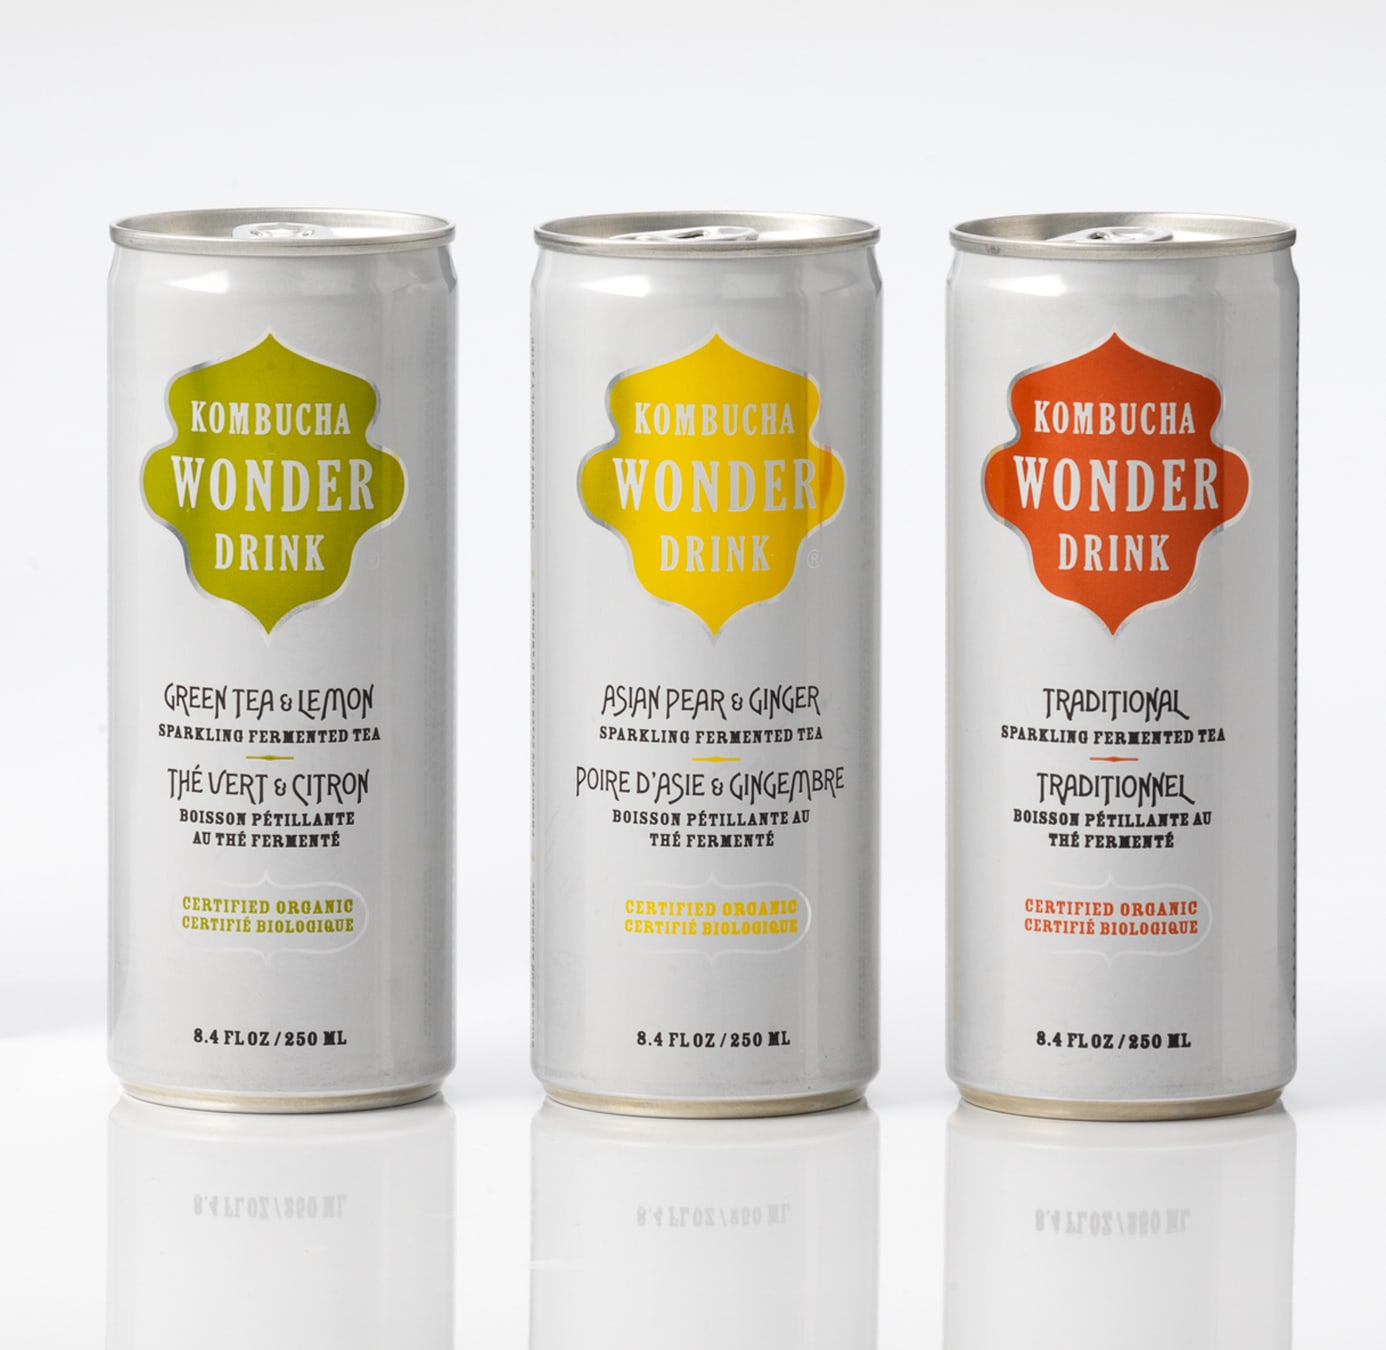 Kombucha Wonder Drink packaging design cans